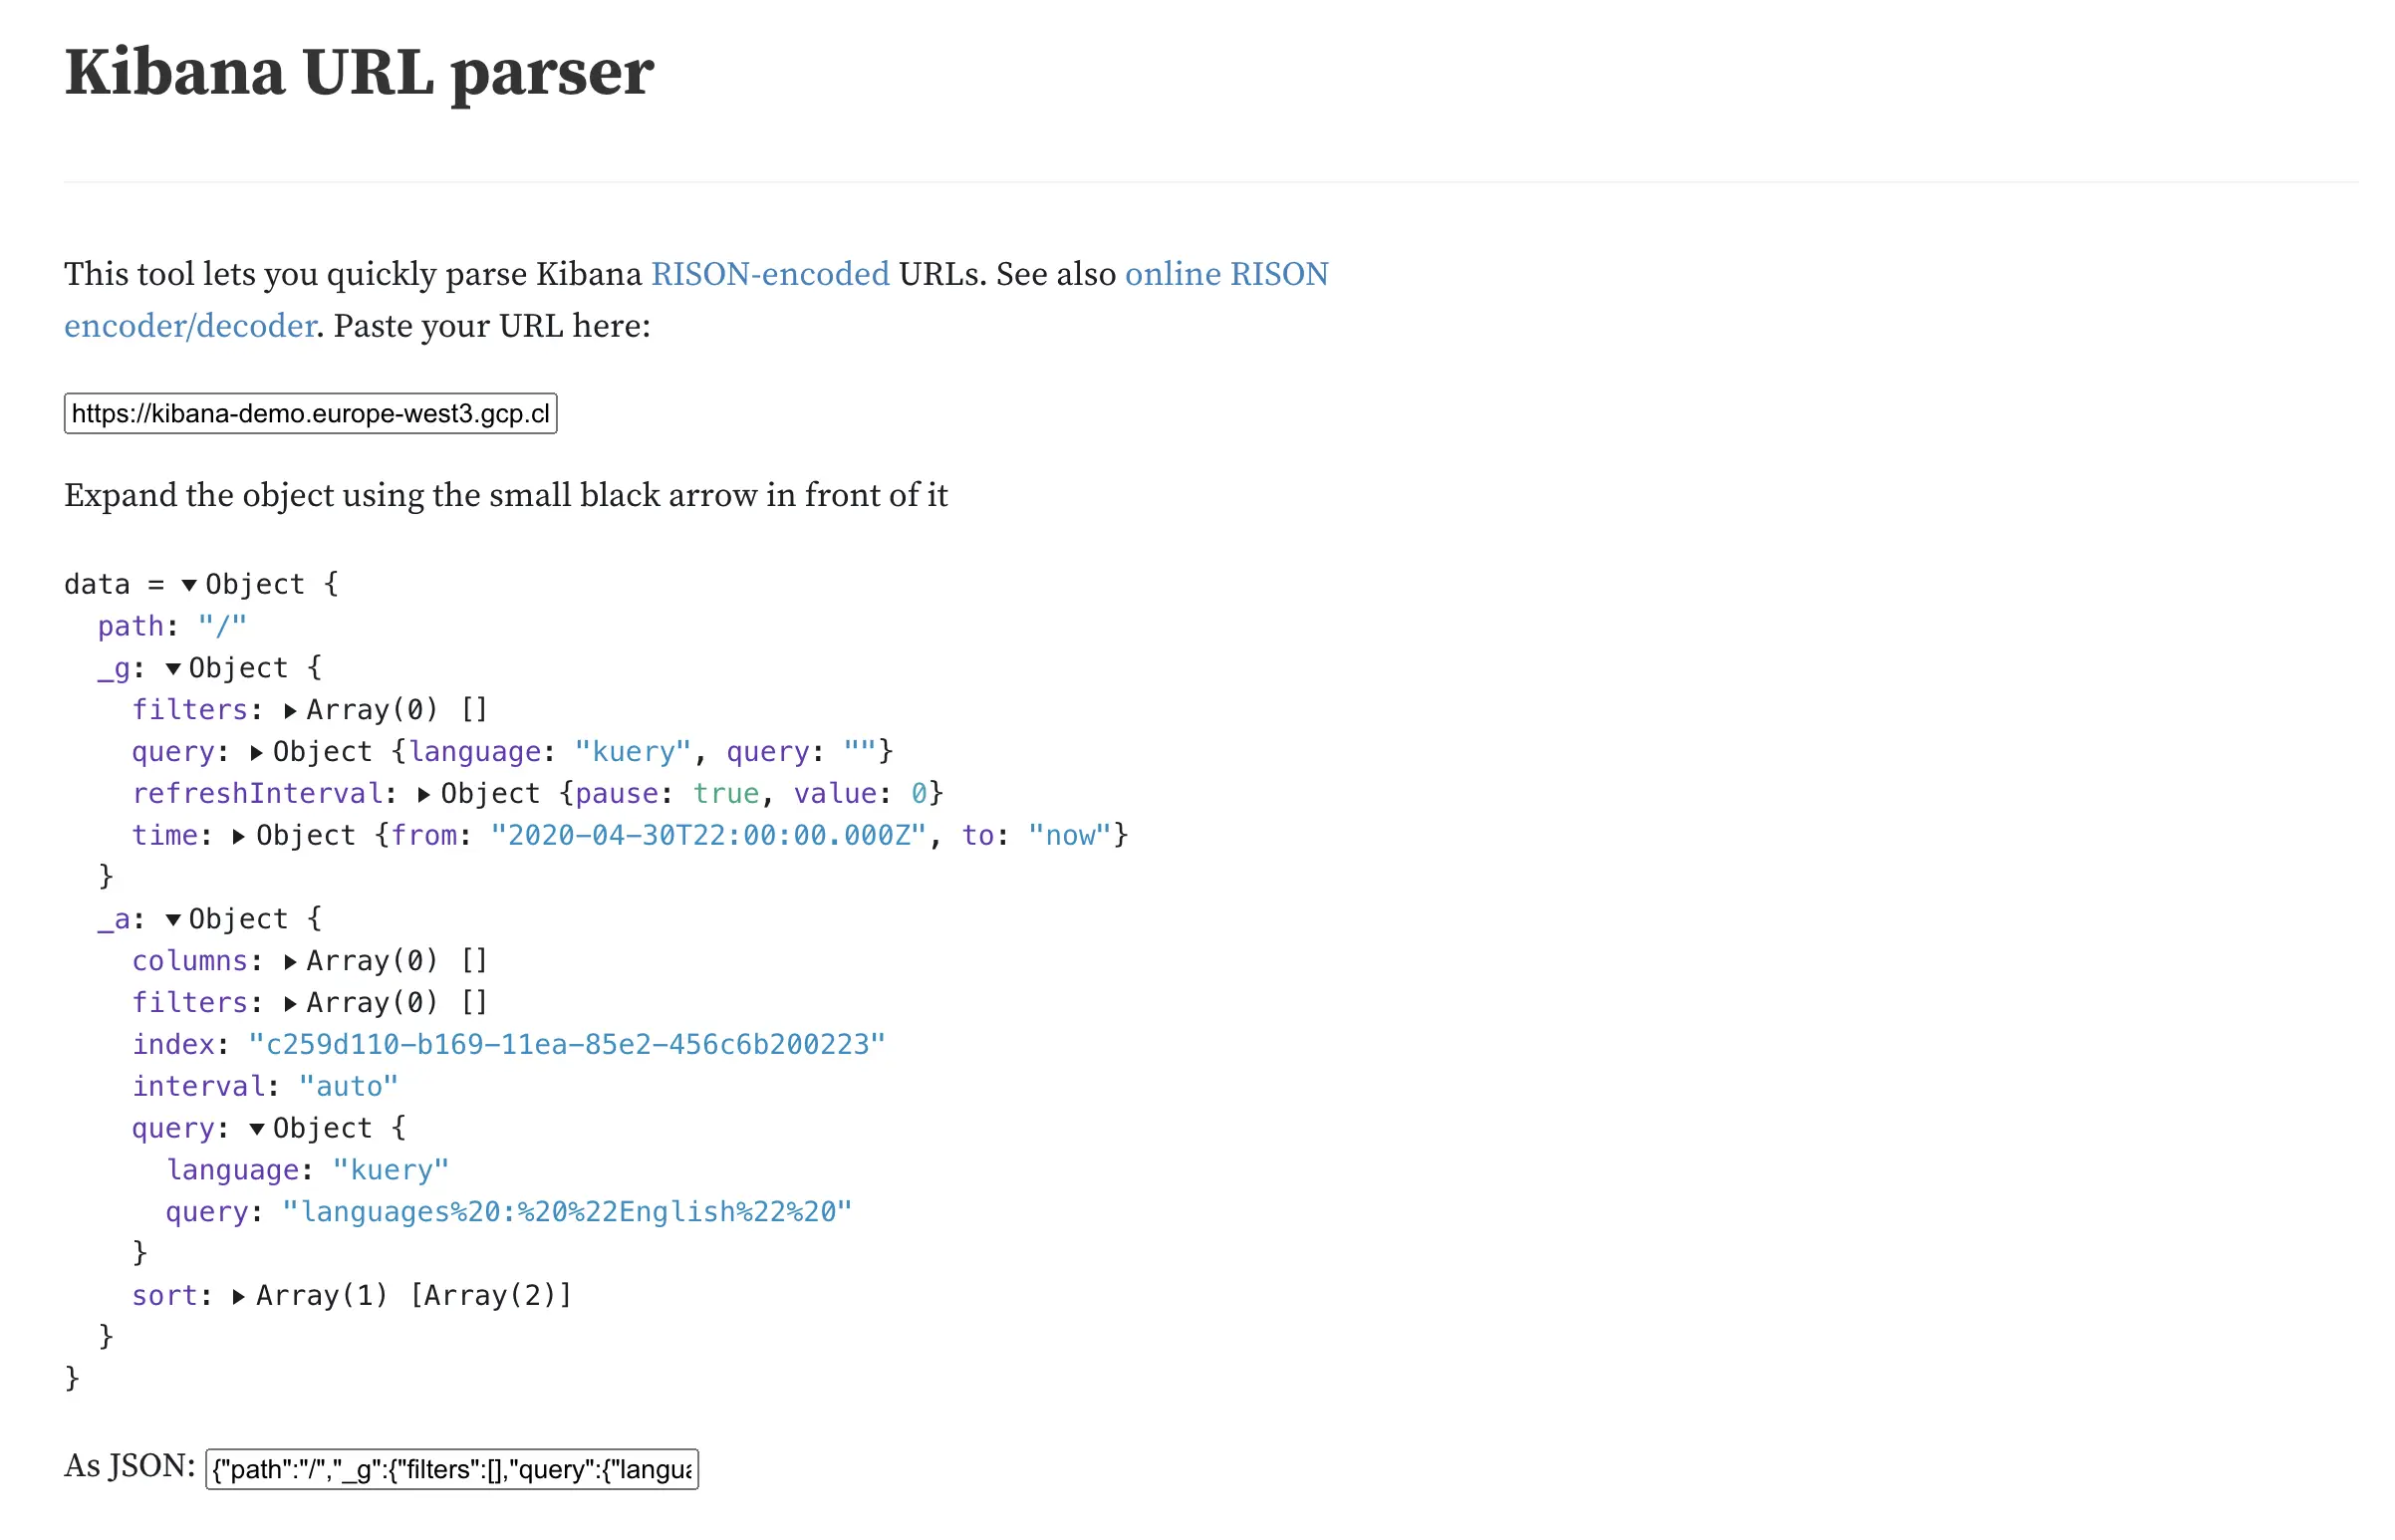 Example of the Kibana URL parser